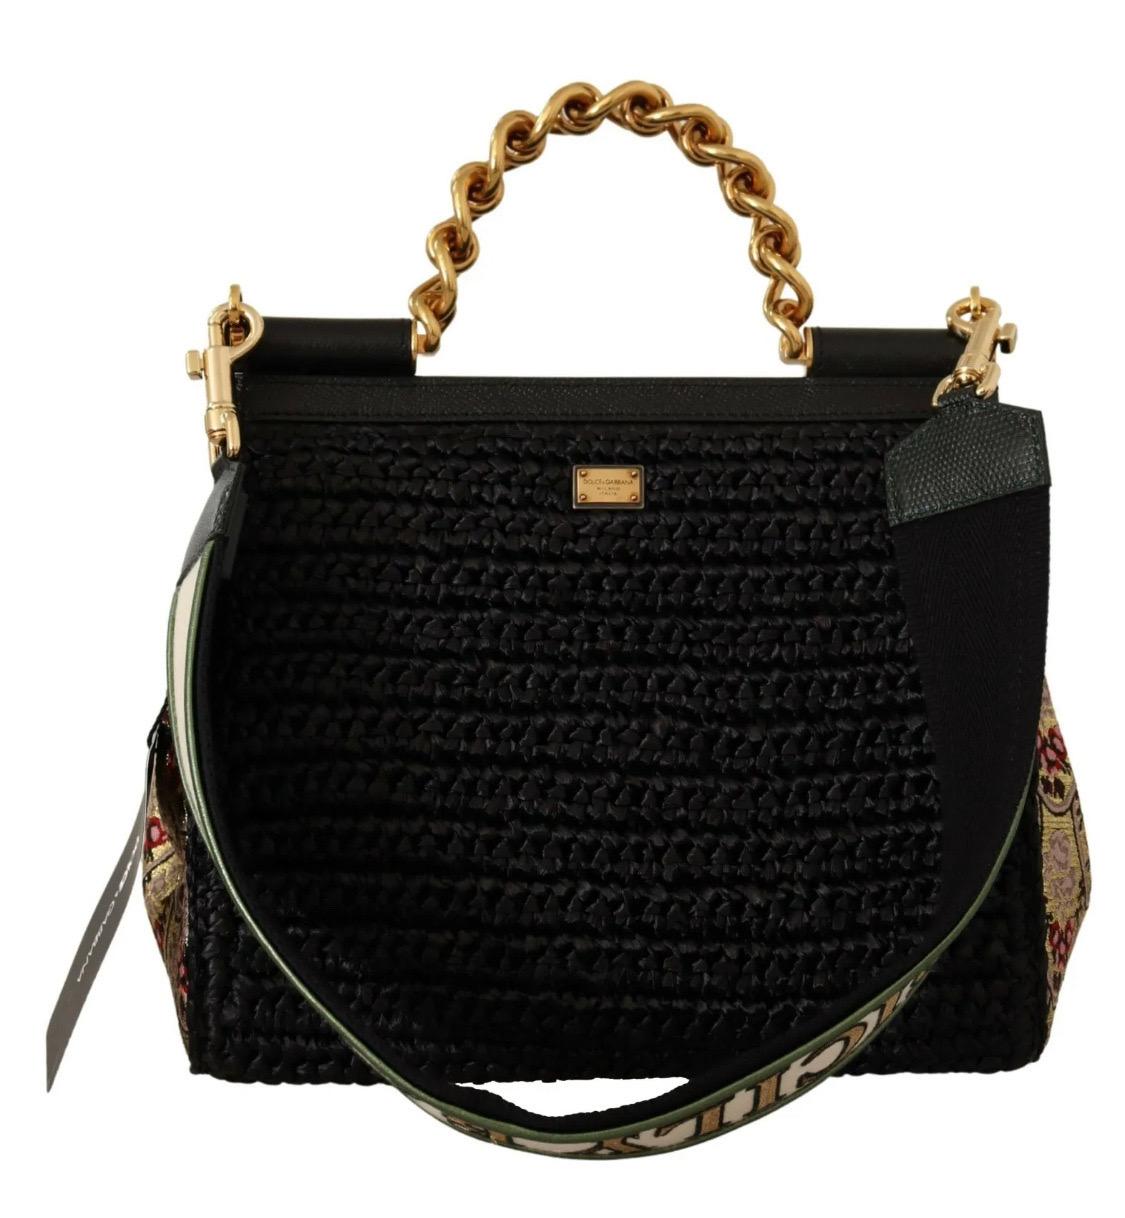 Women's Dolce & Gabbana black Sicily l’amore e bellezza  
Top handle Purse bag 